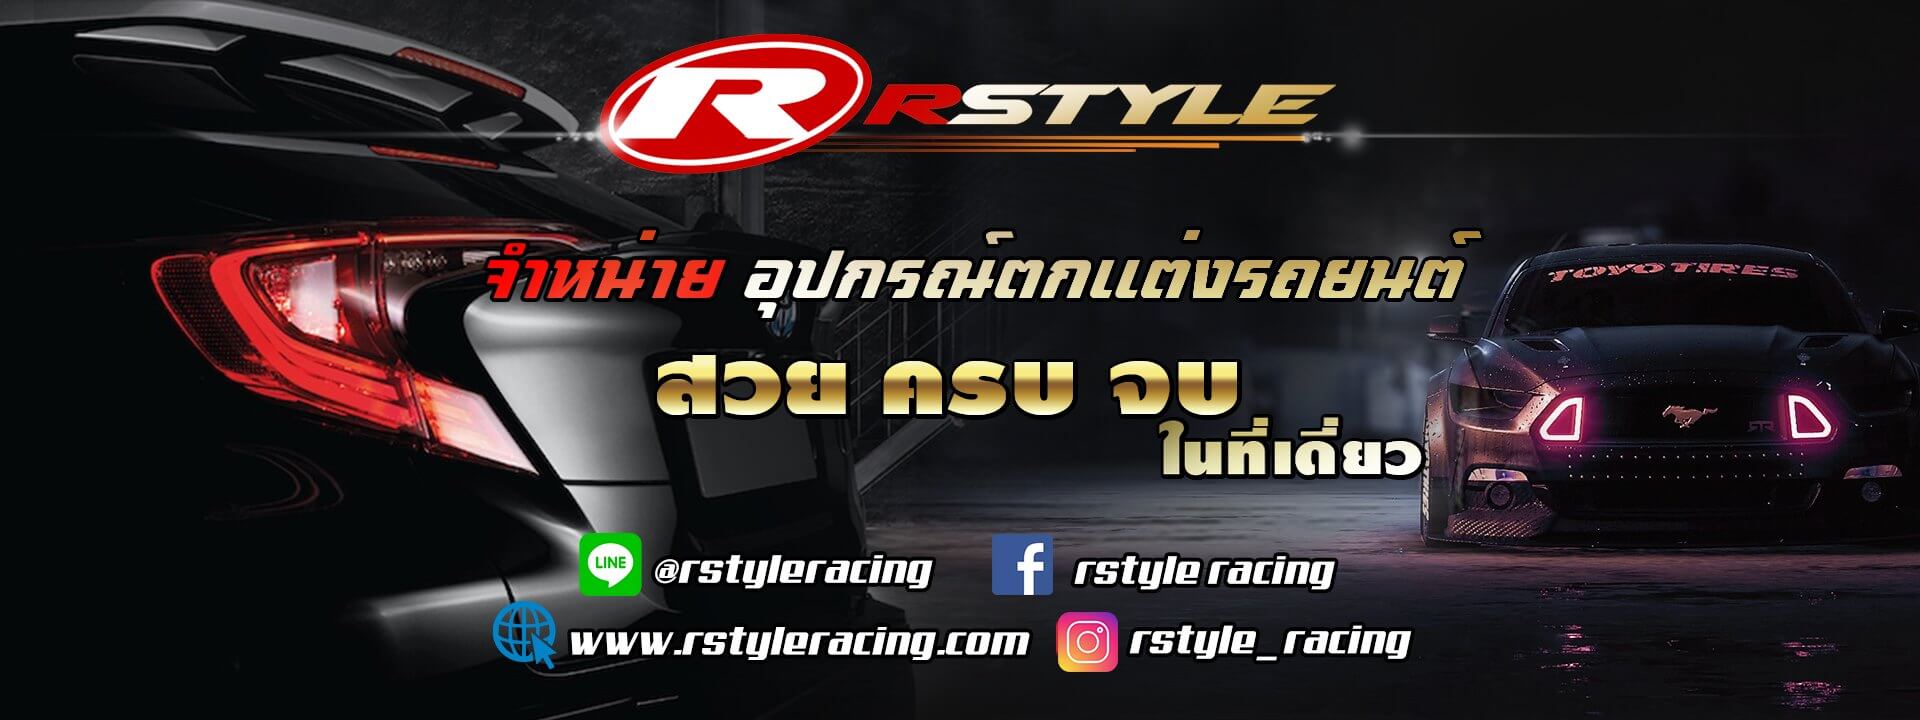 R-Style Racing ชุดแต่งรอบคัน และ ประดับยนต์